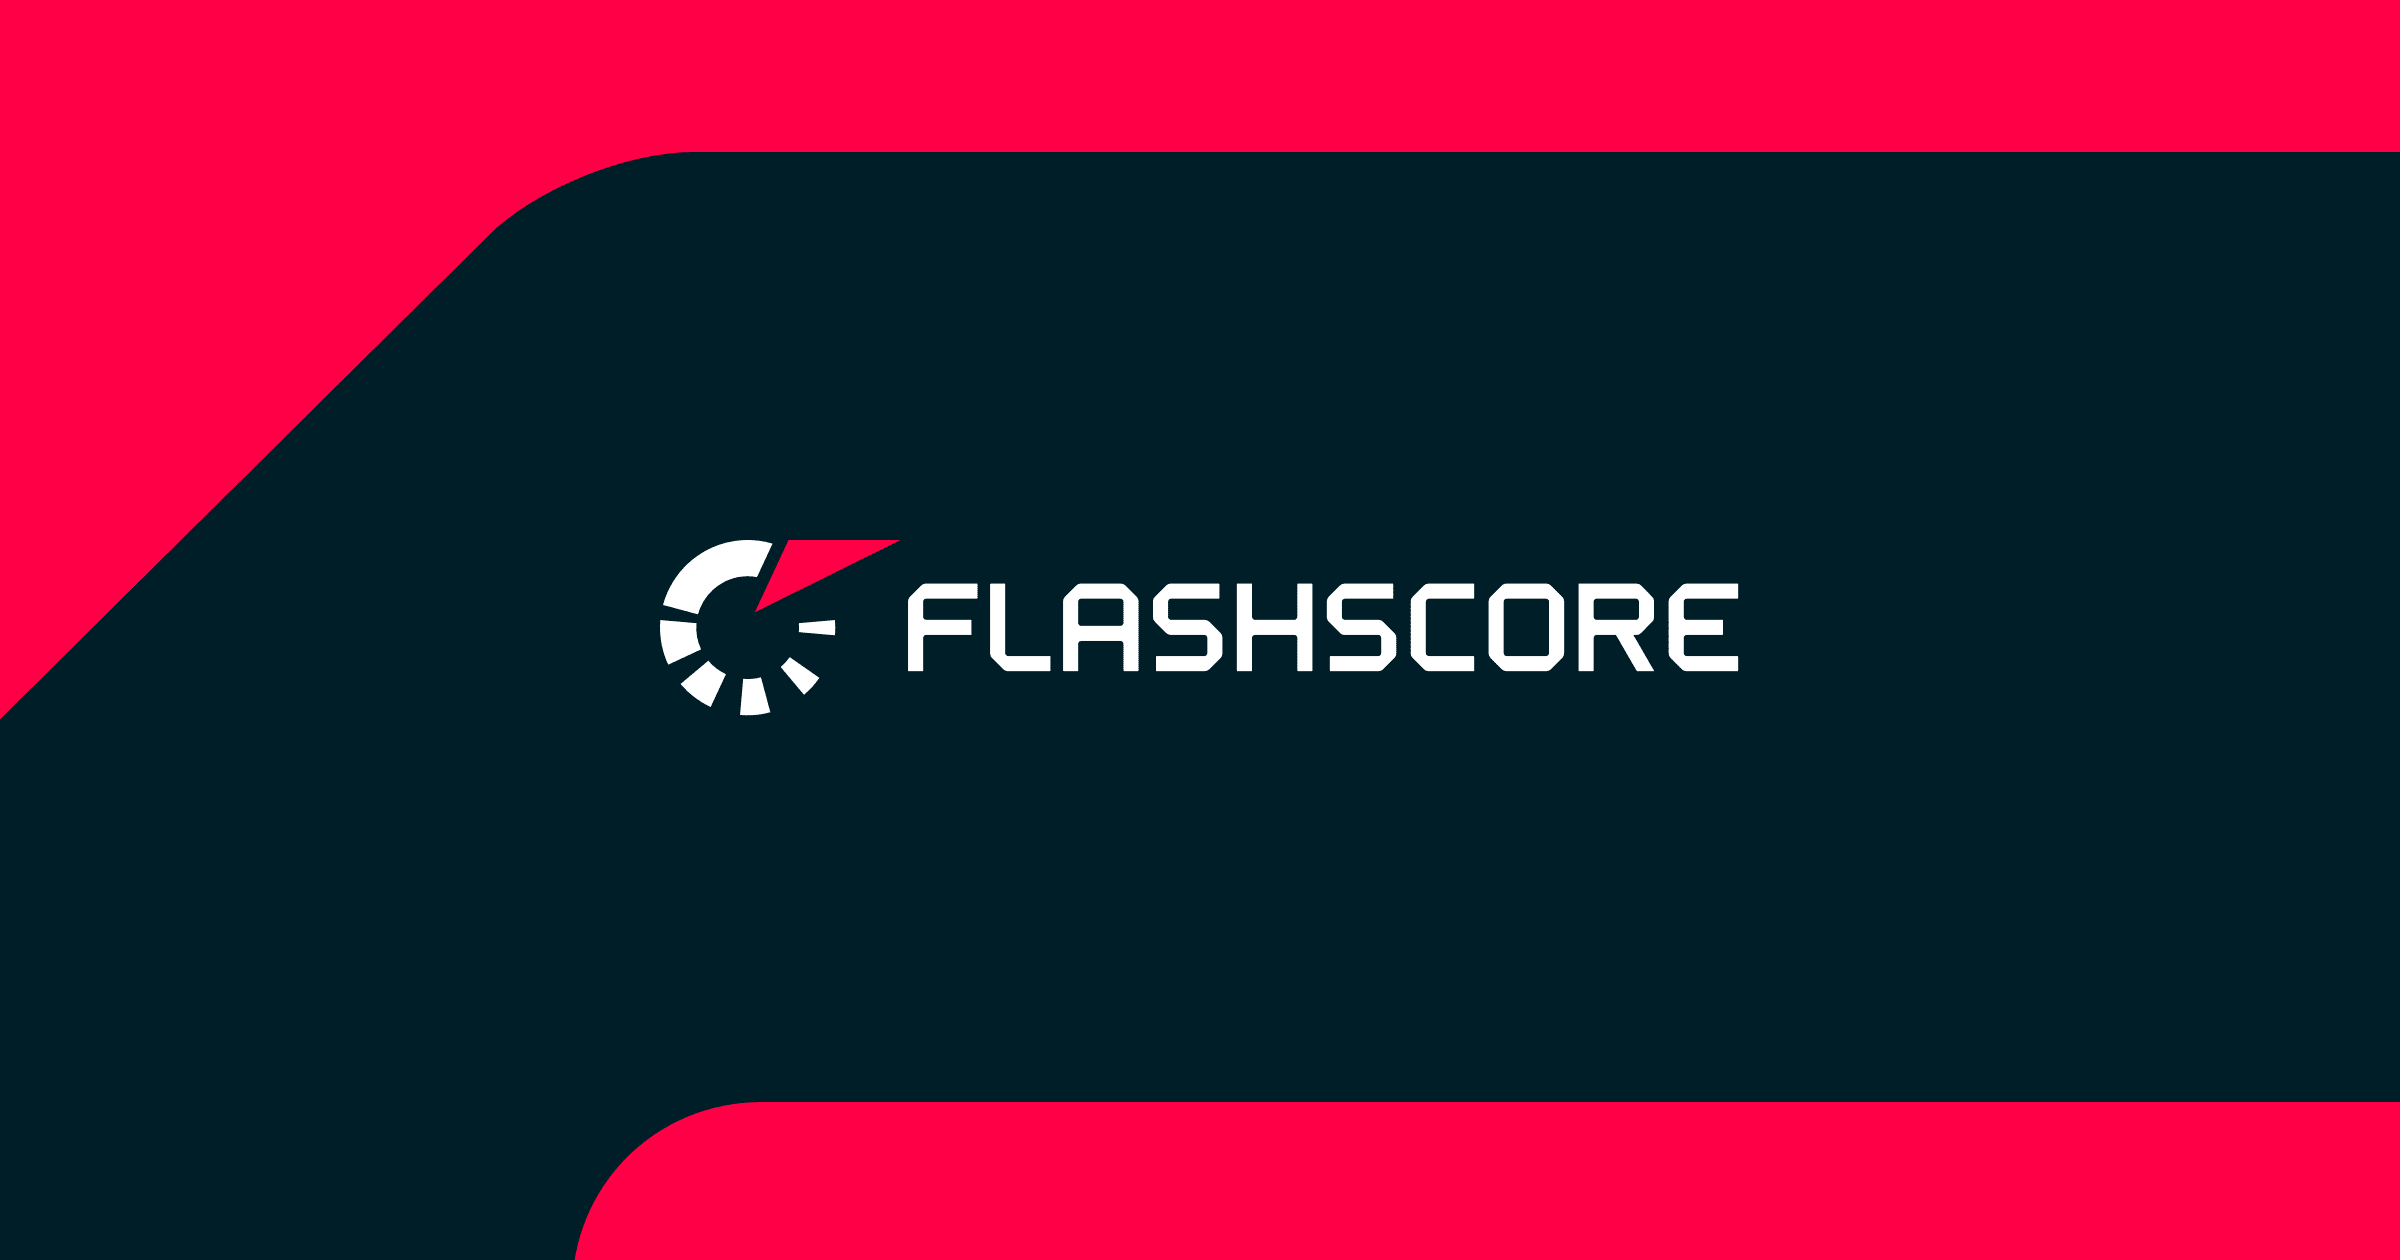 (c) Flashscore.at